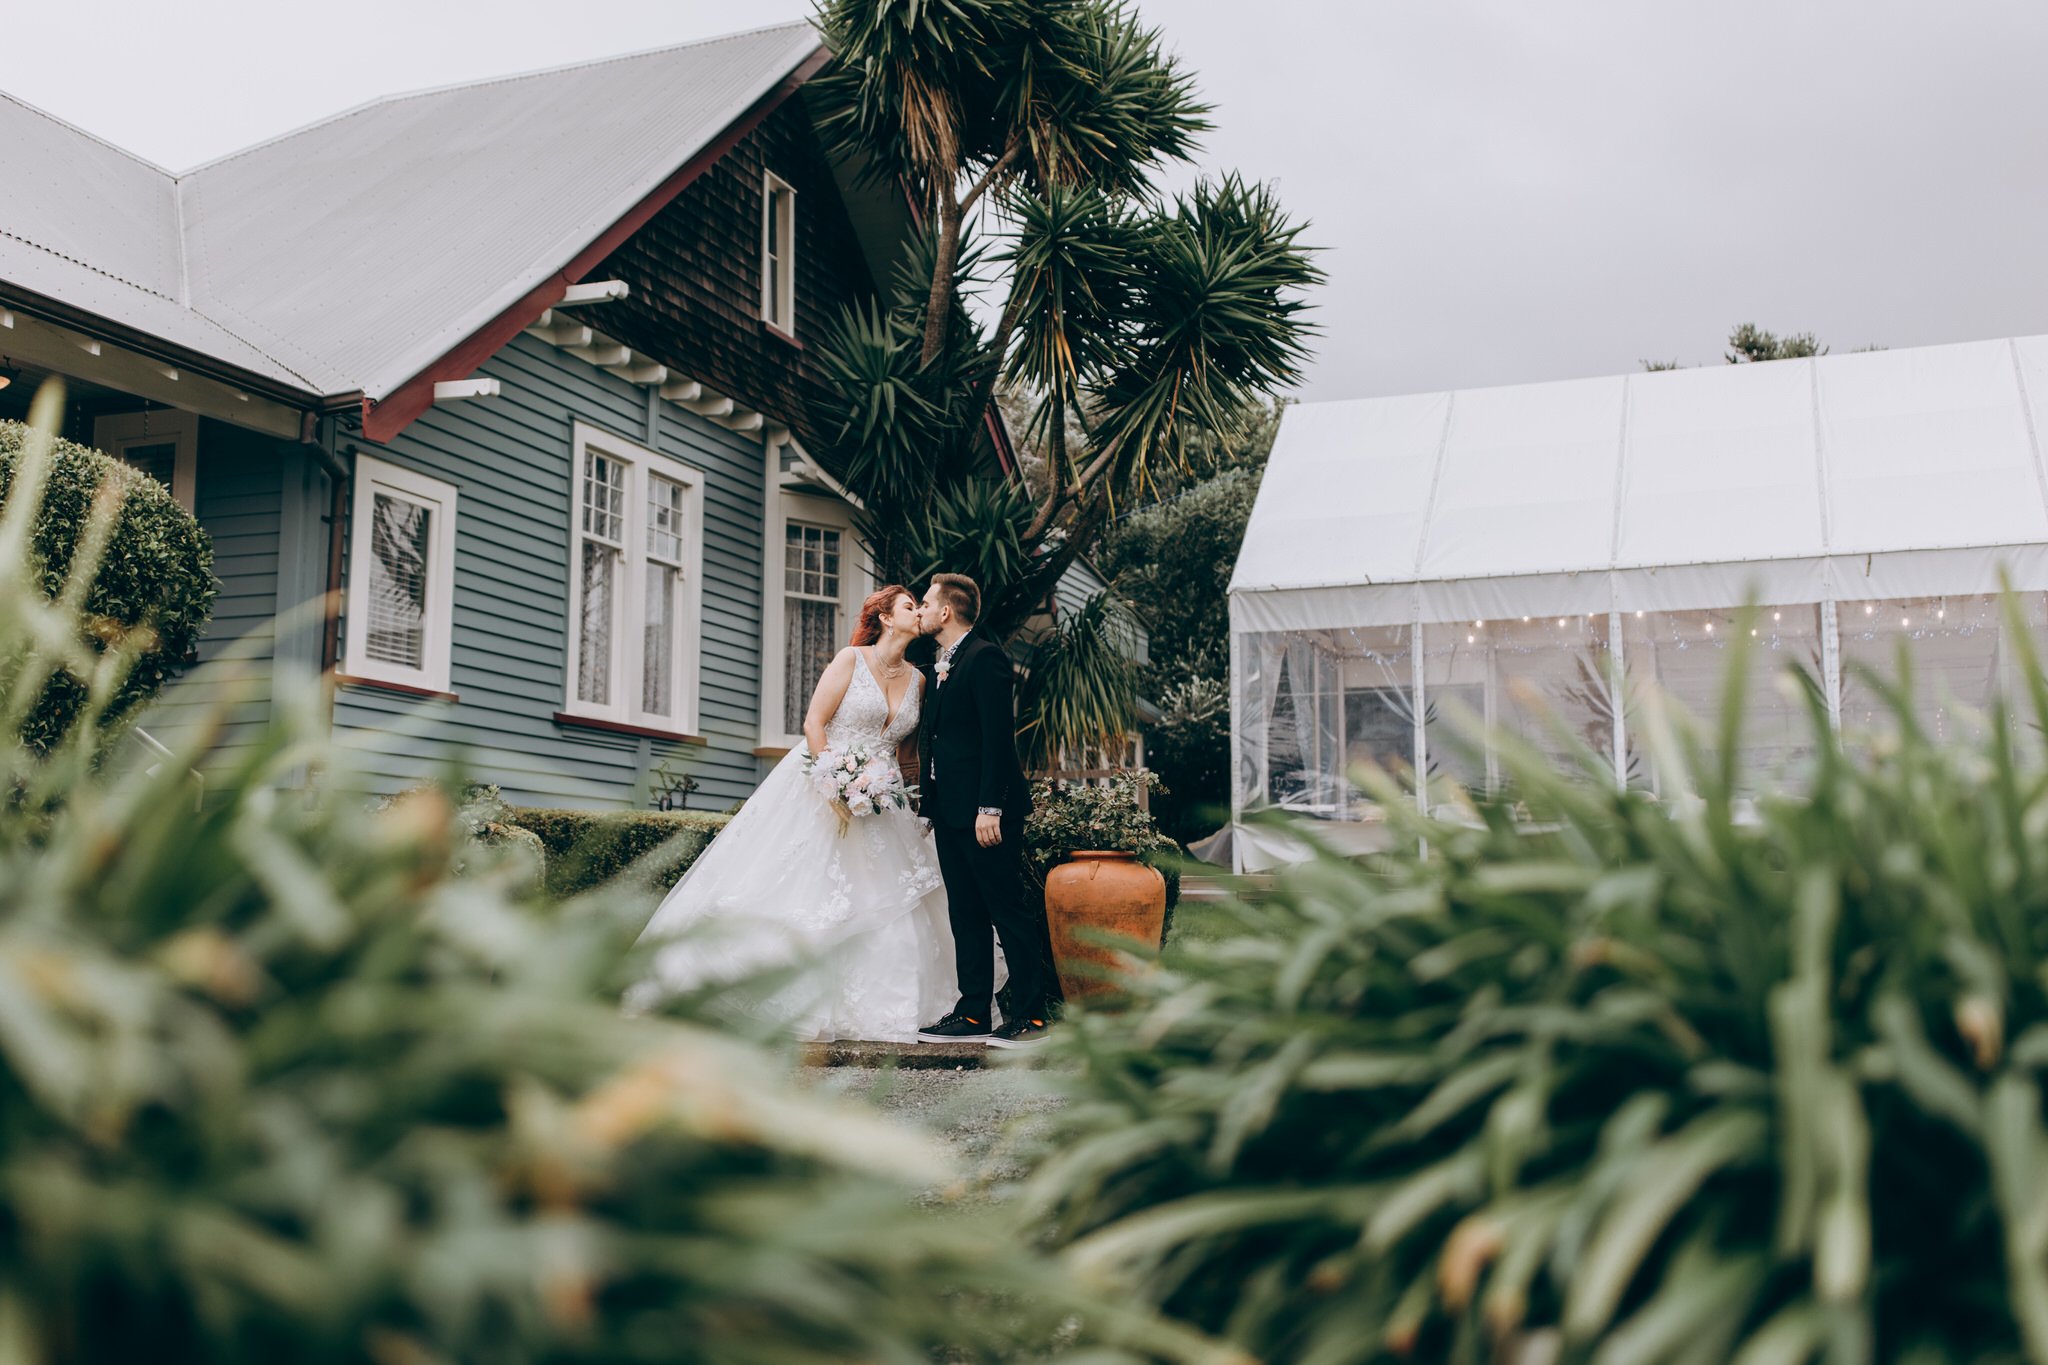 Connemara Country lodge Auckland wedding 9.jpg